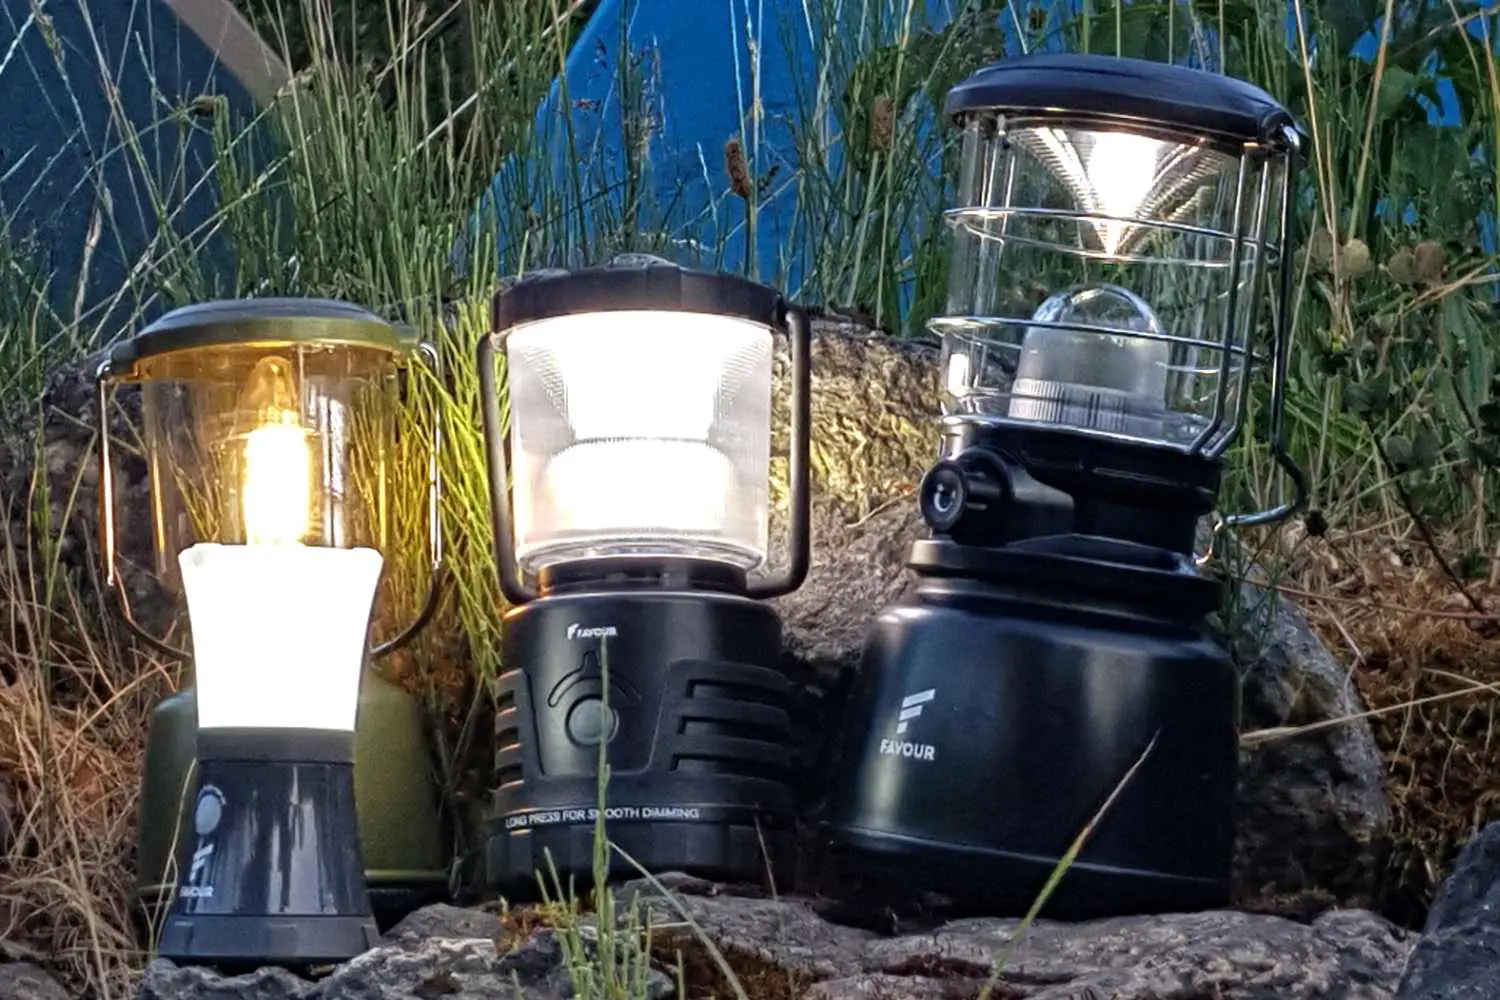 Camping Lampe mit 2 abnehmbaren Taschenlampen - Lepro